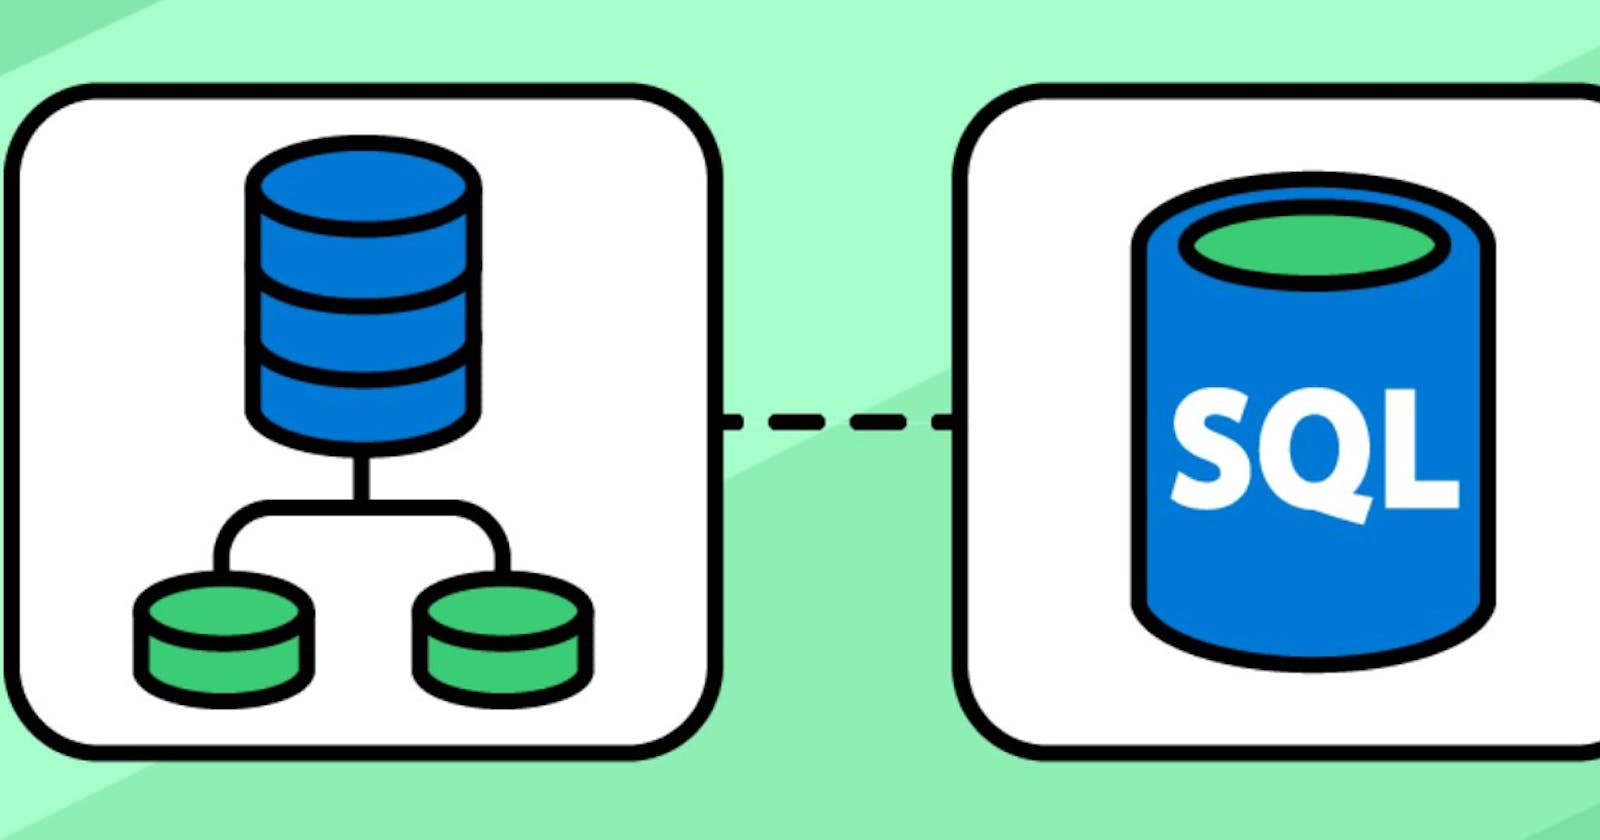 Essential SQL commands for database management